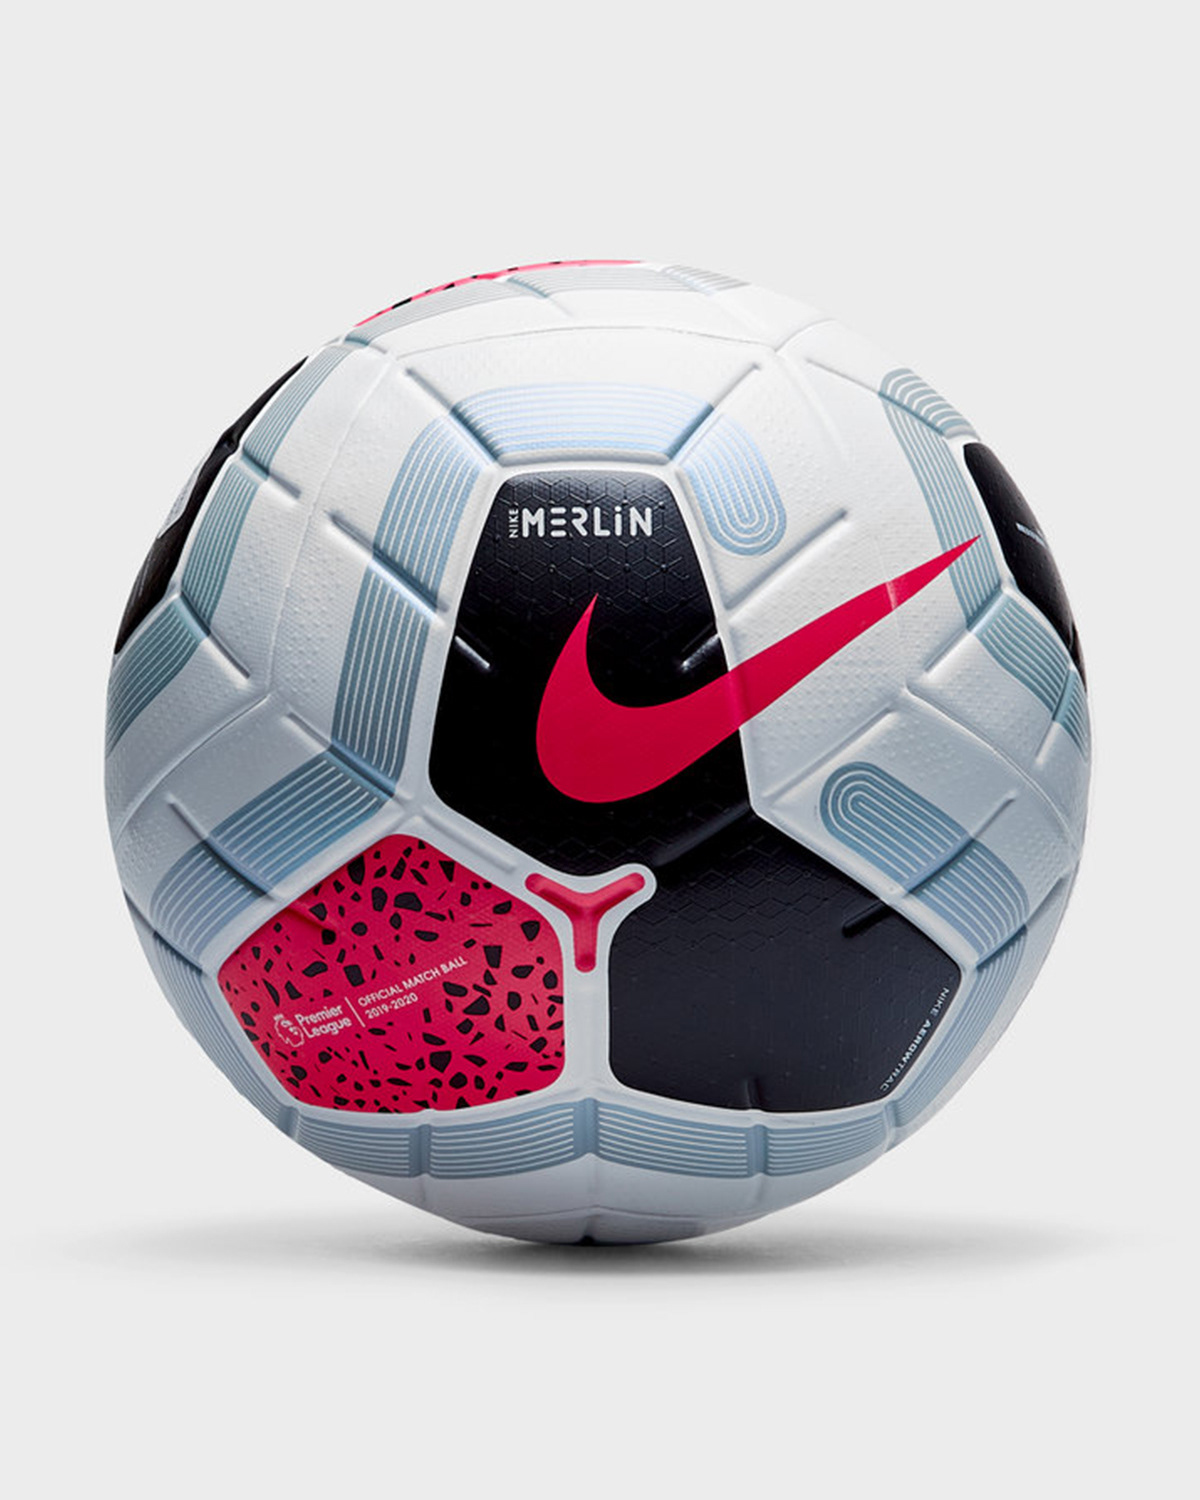 Delincuente Mentor Respectivamente Nike Merlin | Premier League Match Ball 2019/20 on Behance